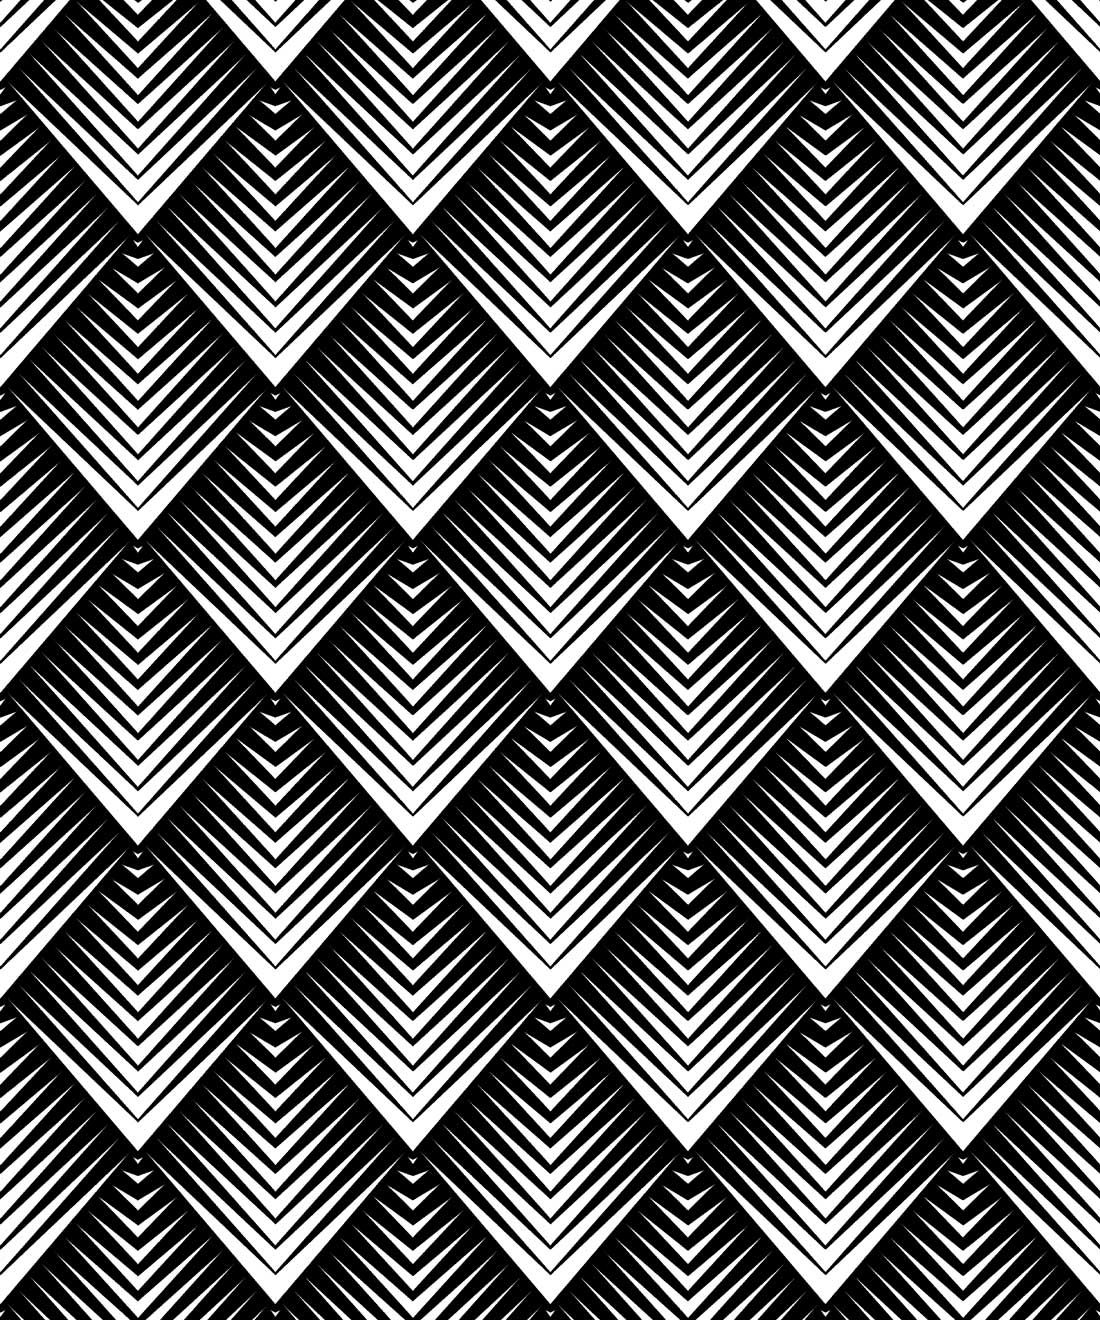 Nocturnal Wallpaper • geometric • Monochrome Reverse Swatch